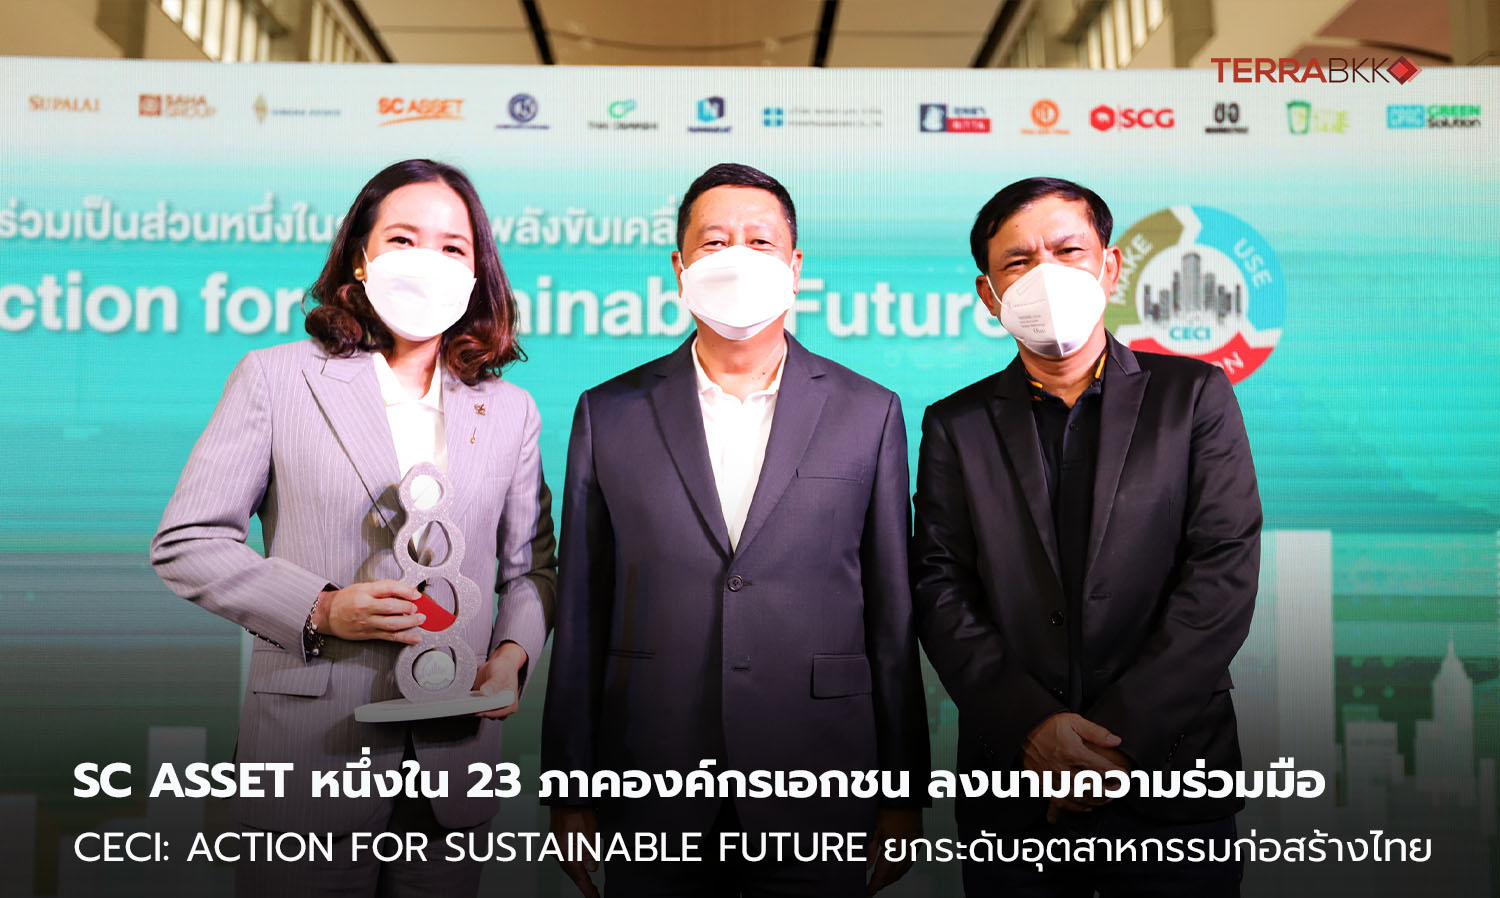 SC Asset หนึ่งใน 23 ภาคองค์กรเอกชน ลงนามความร่วมมือ CECI: Action for Sustainable Future  เพื่อบรรลุเป้าหมายในการยกระดับอุตสาหกรรมก่อสร้างไทย ด้วยหลักเศรษฐกิจหมุนเวียนอย่างเป็นรูปธรรม ดันอุตสาหกรรมก่อสร้างไทยเติบโตยั่งยืน